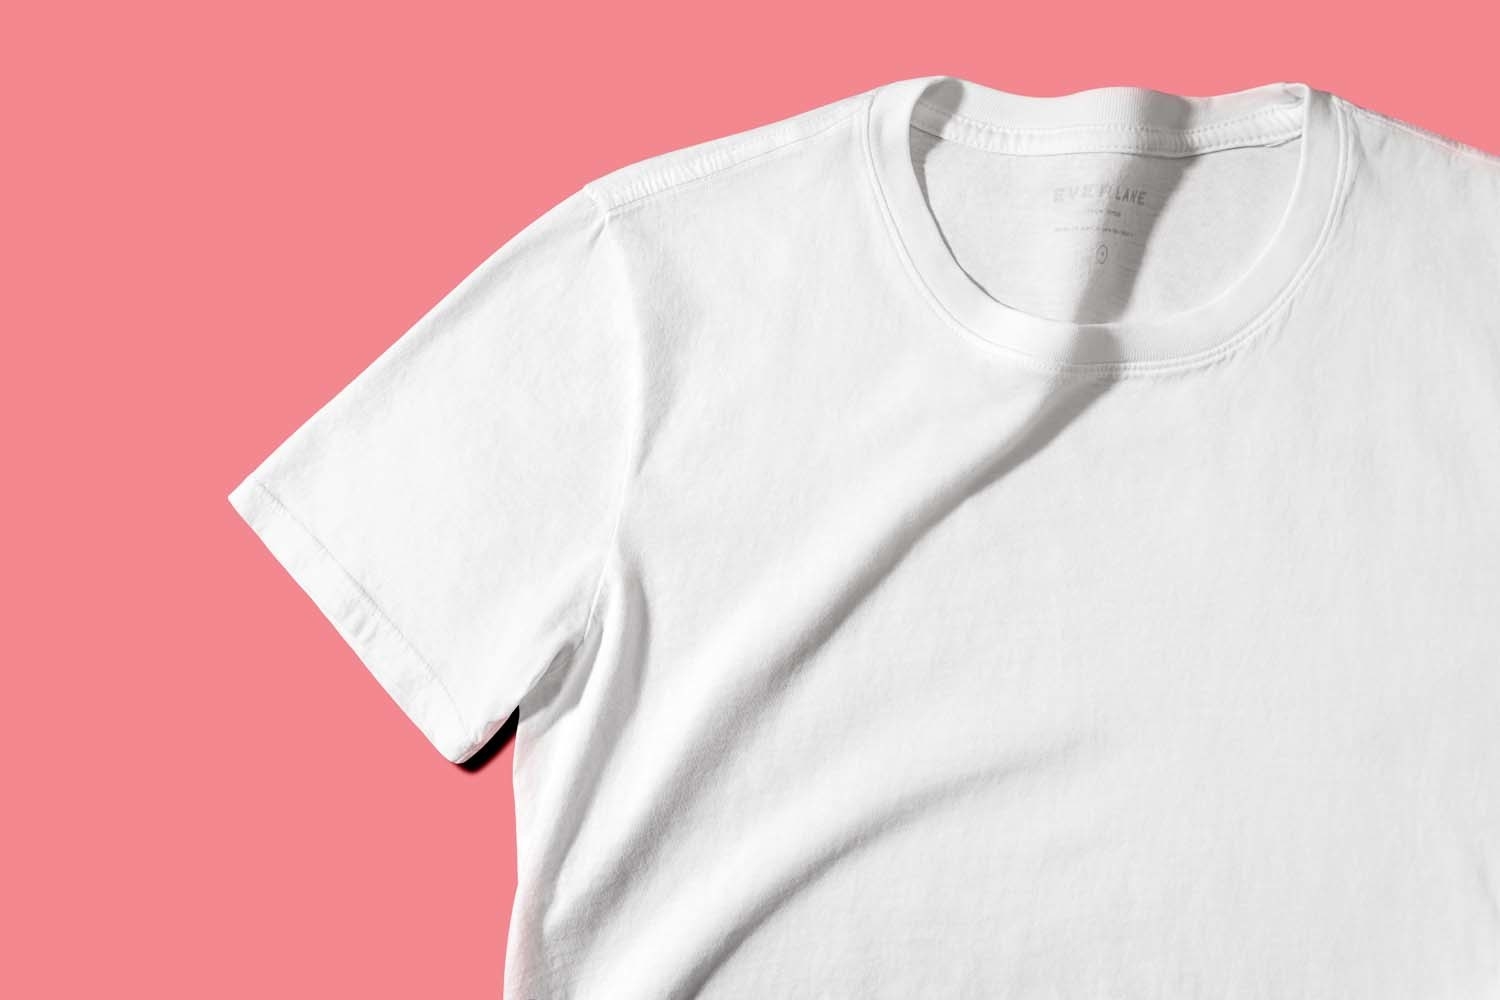 Regenboog bezoeker karton Review: The Best Men's T-Shirts For Any Budget